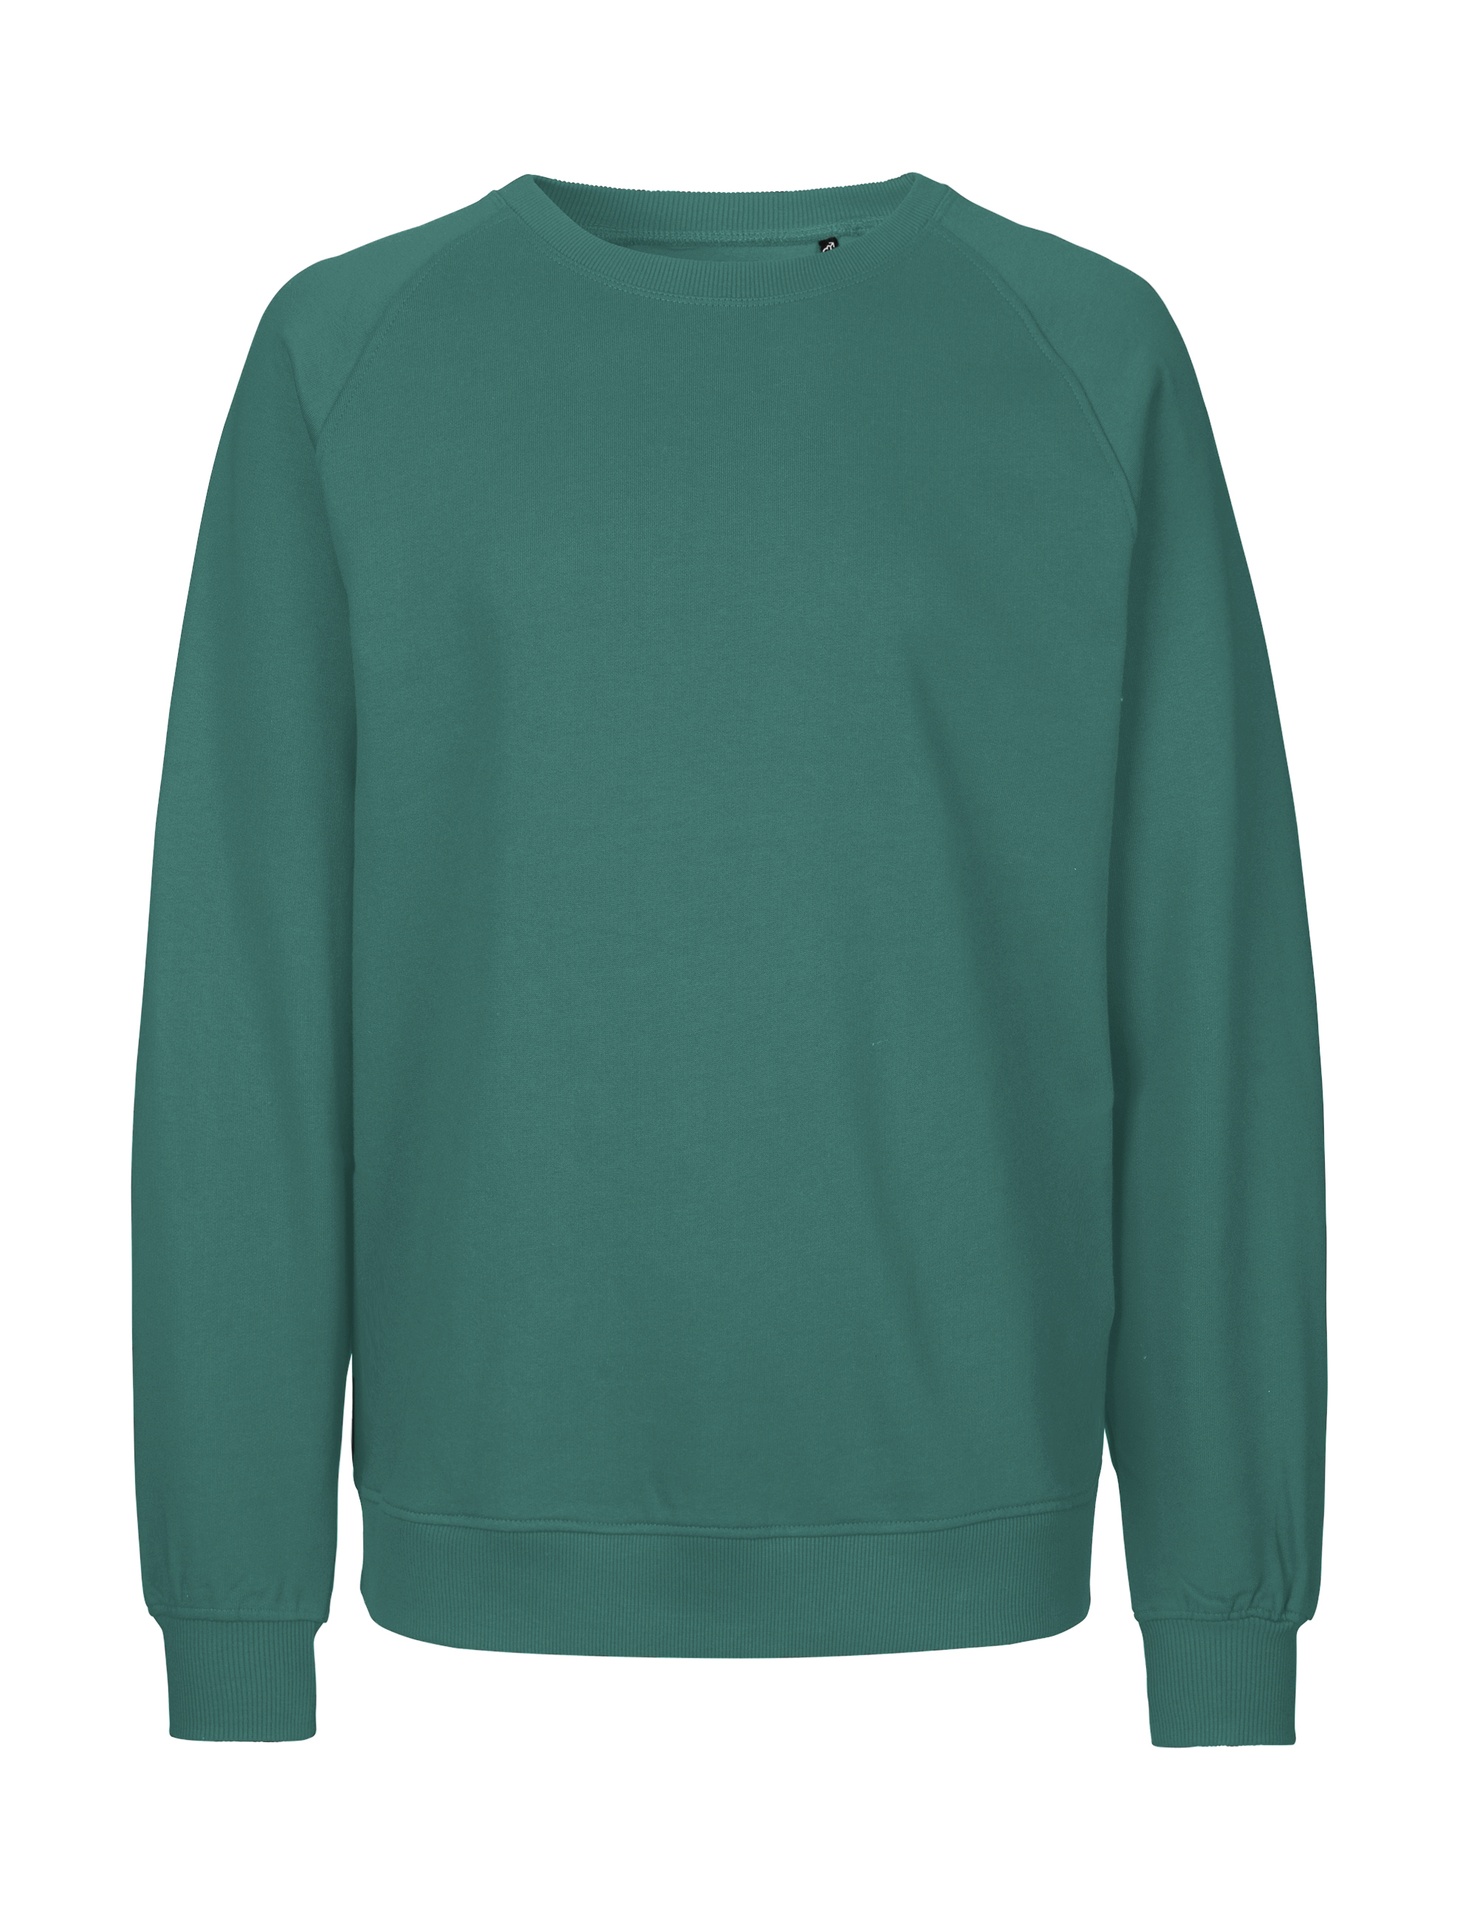 [PR/02872] Unisex Sweatshirt (Teal 52, XL)